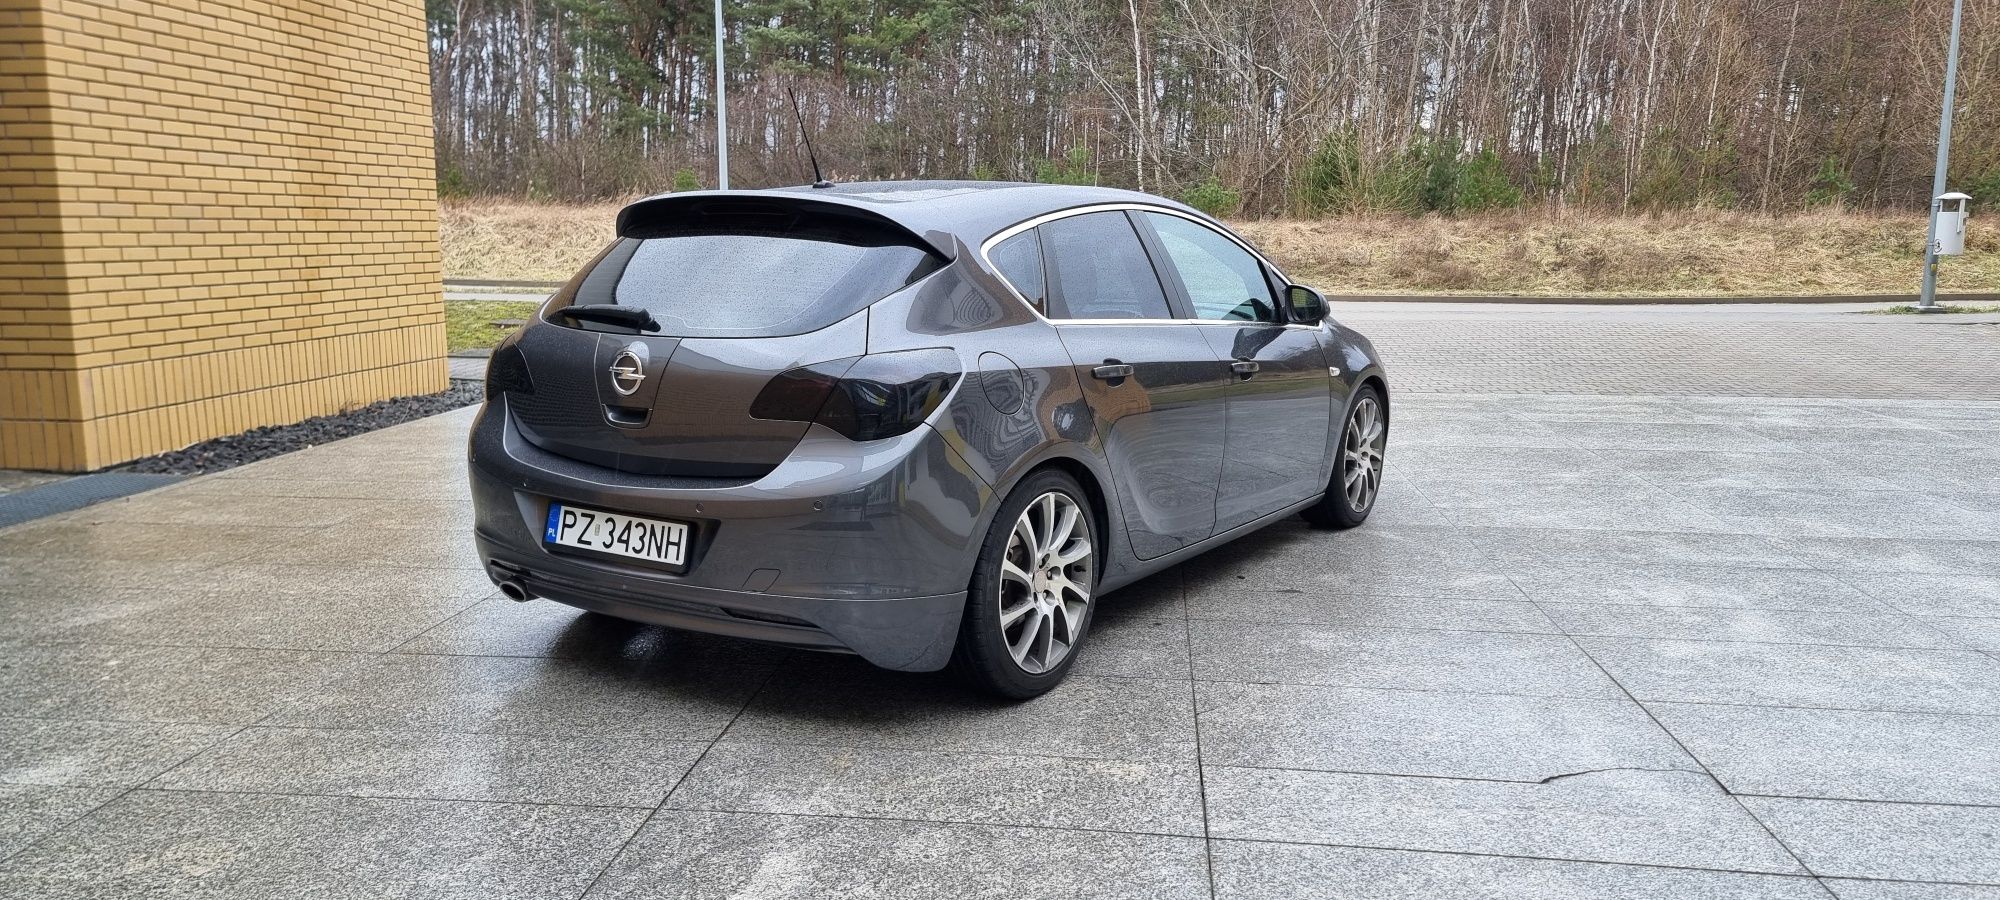 Opel Astra j IV 2010r cosmo 1.4 turbo 176 hp. Zadbana bez wkładu!